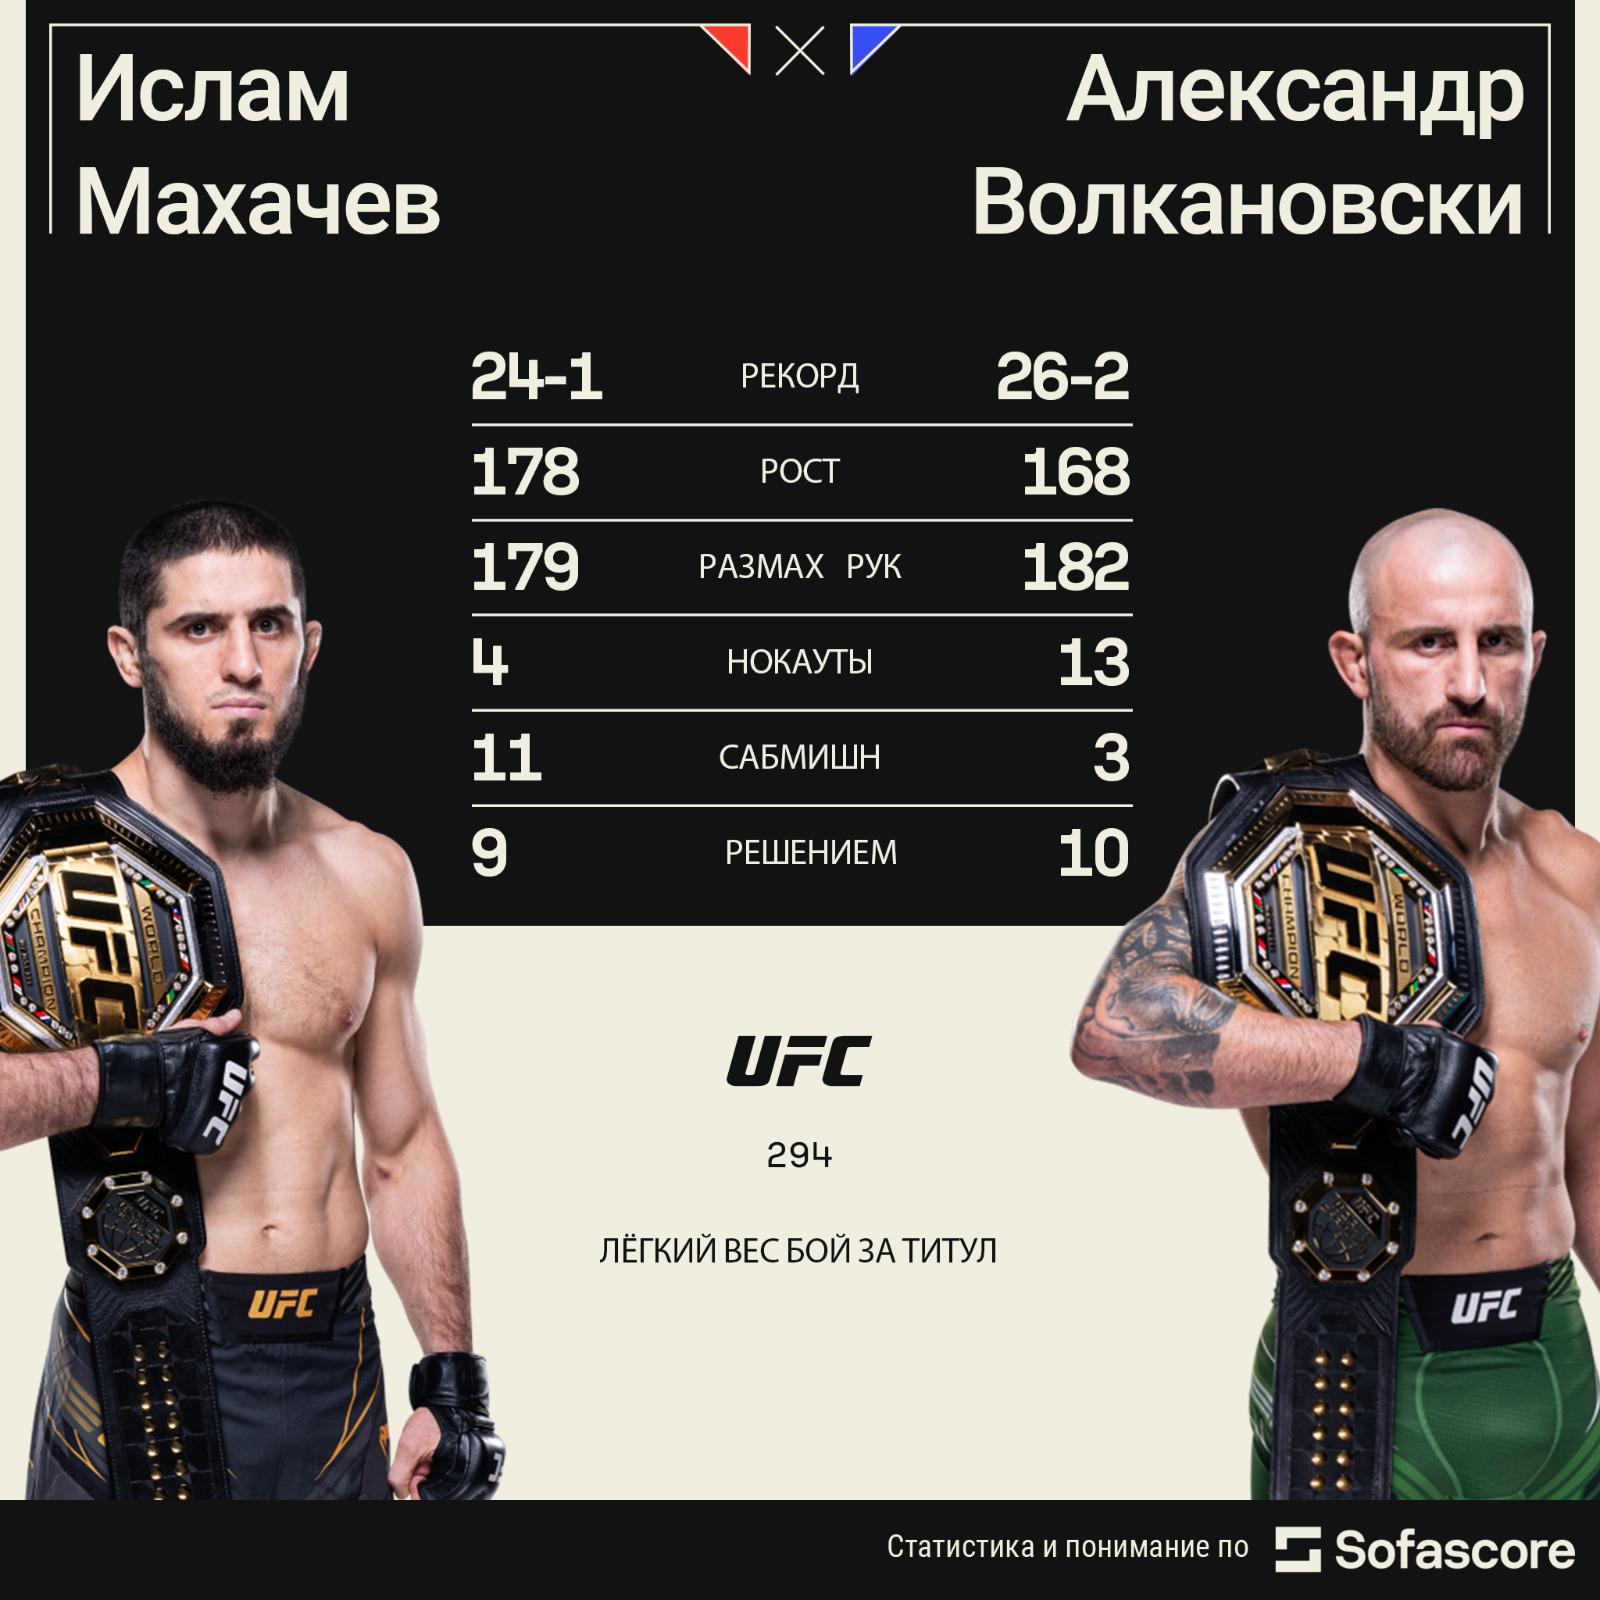 Саид Нурмагомедов «задушил» соперника на 73-й секунде на турнире UFC